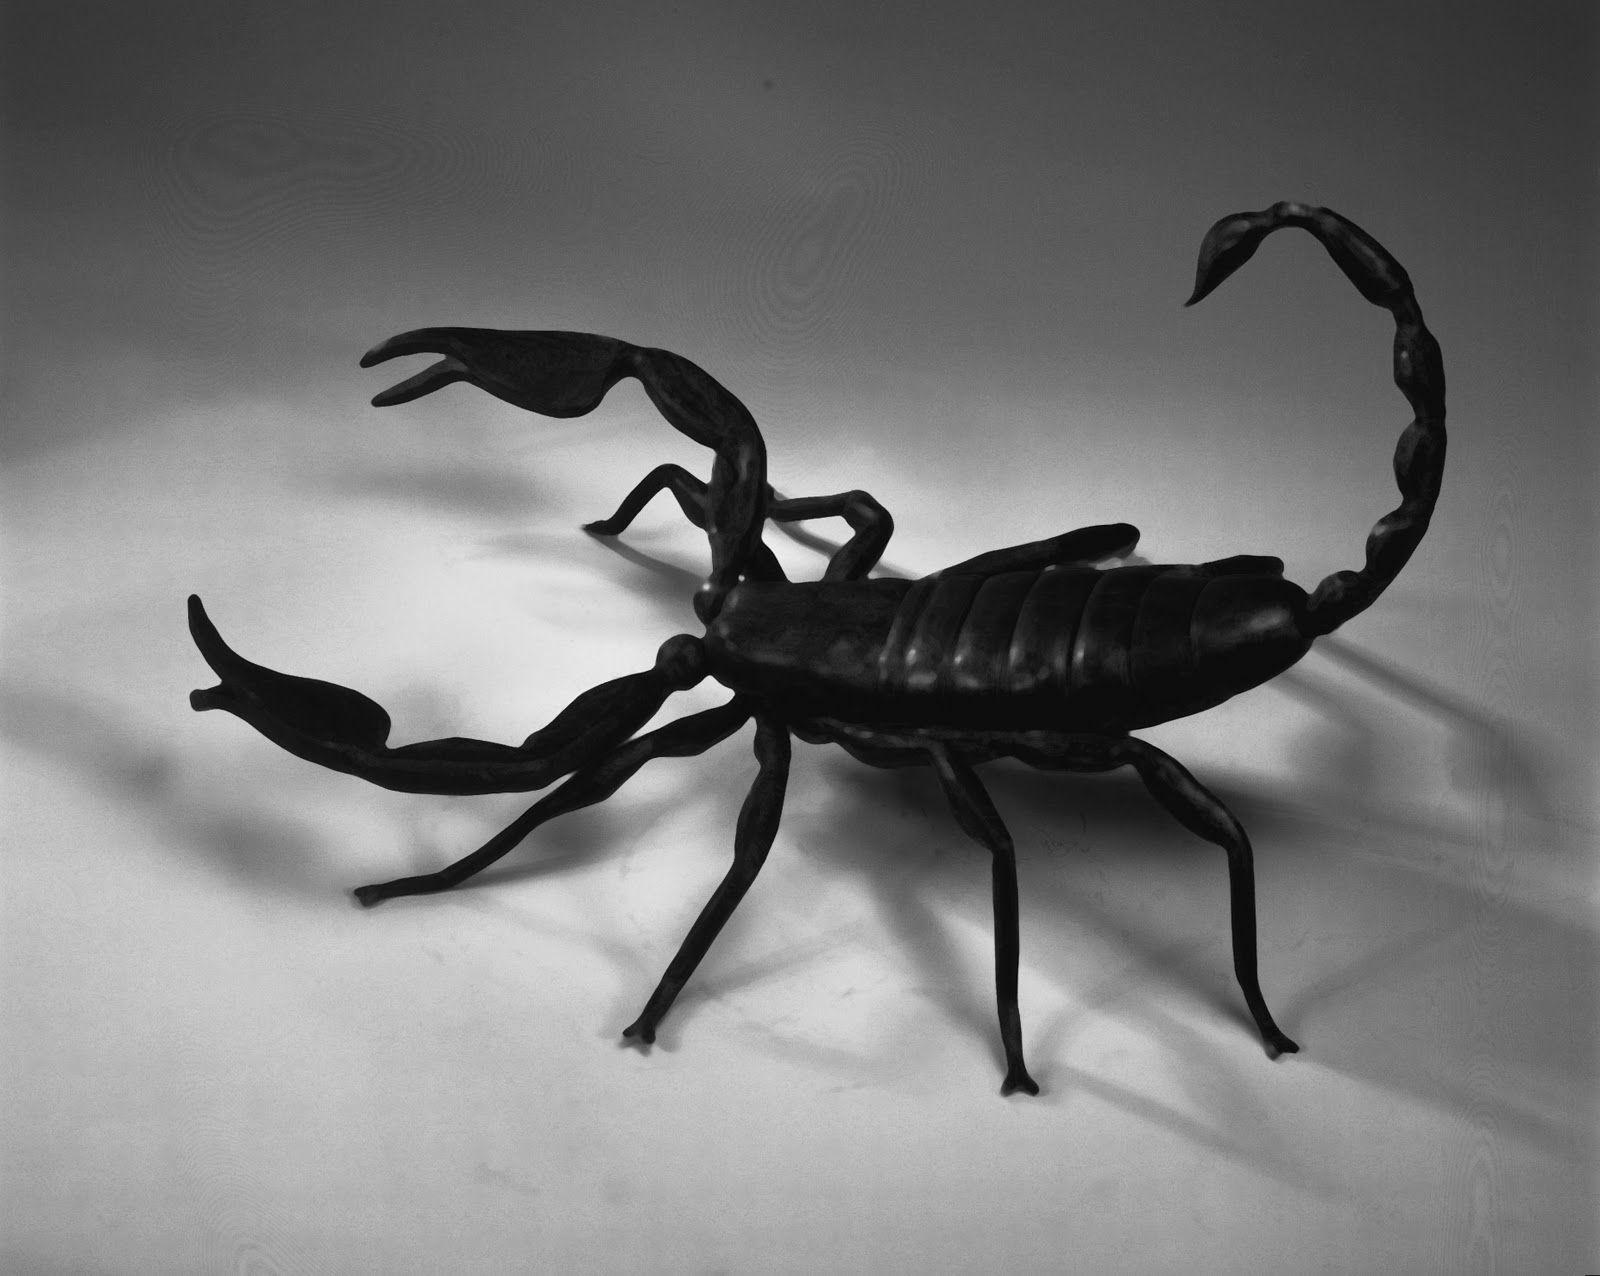 Best Wallpaper: Scorpions Wallpaper 2560×1440 Scorpion Wallpaper